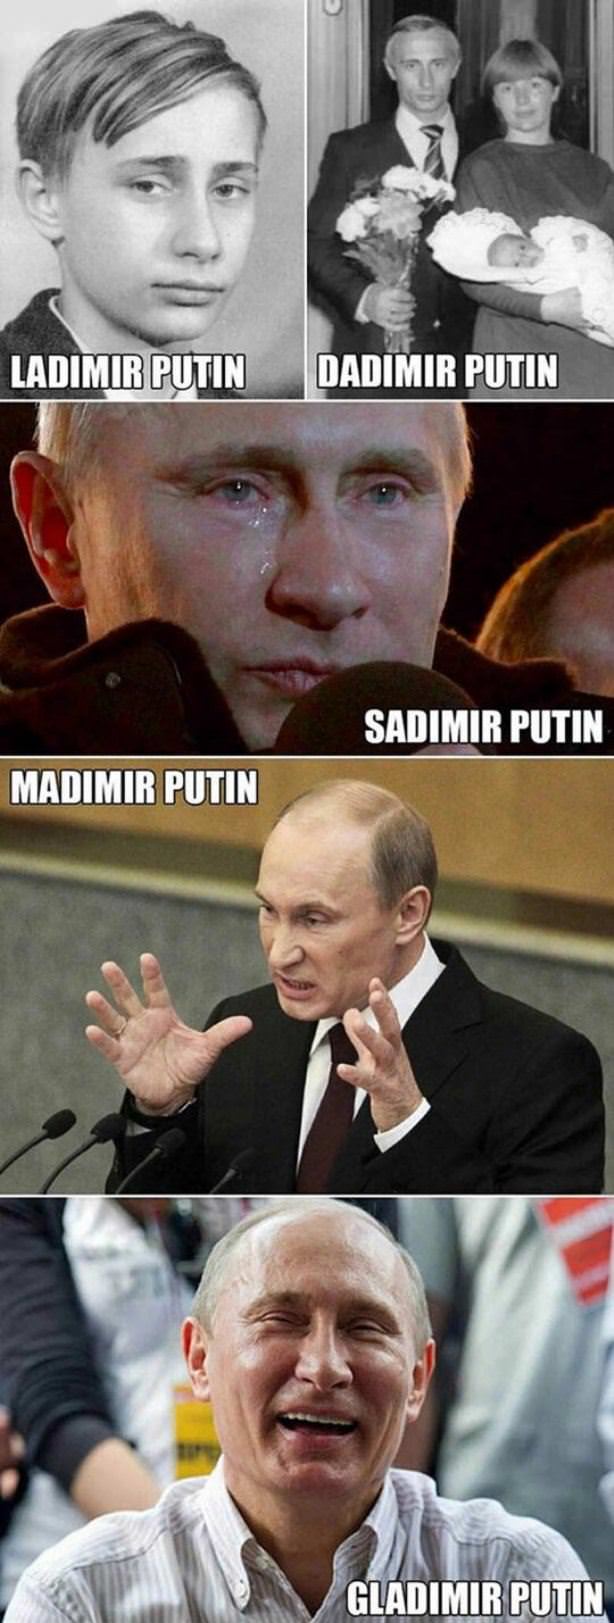 Putins